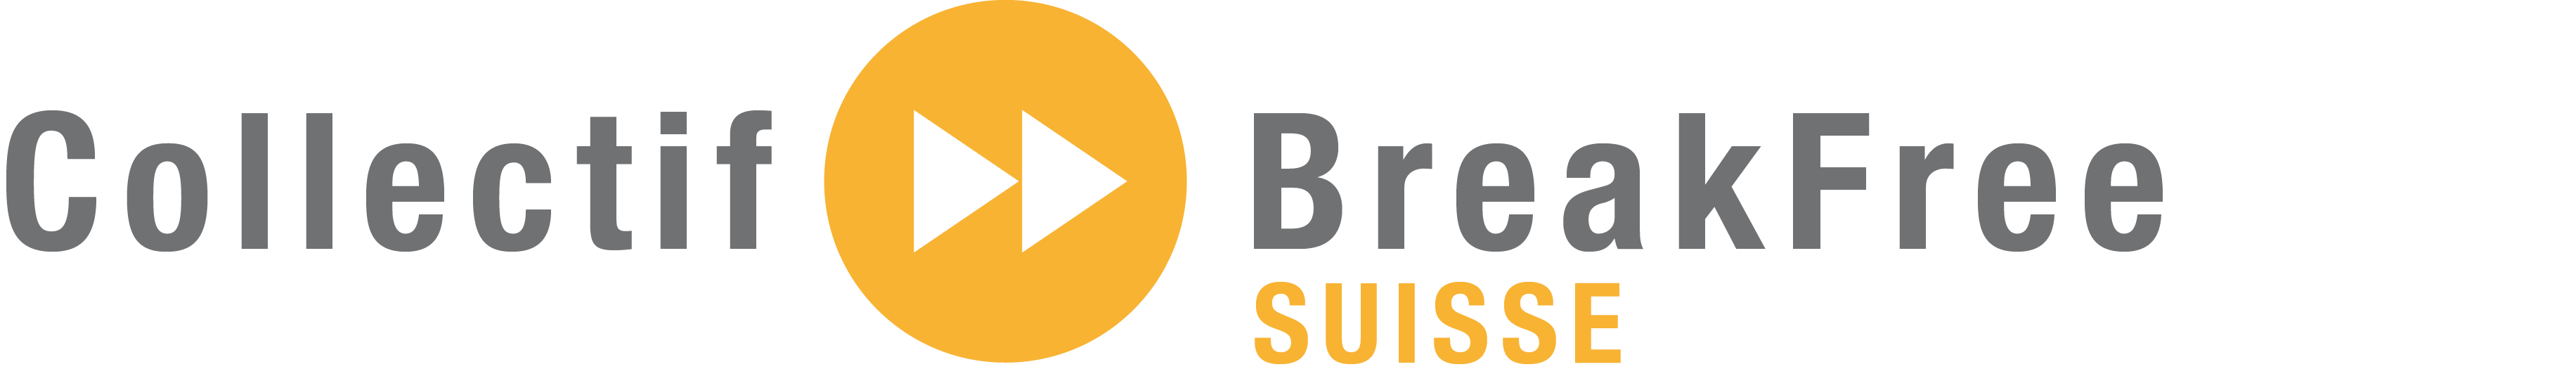 Breakfree Suisse logo